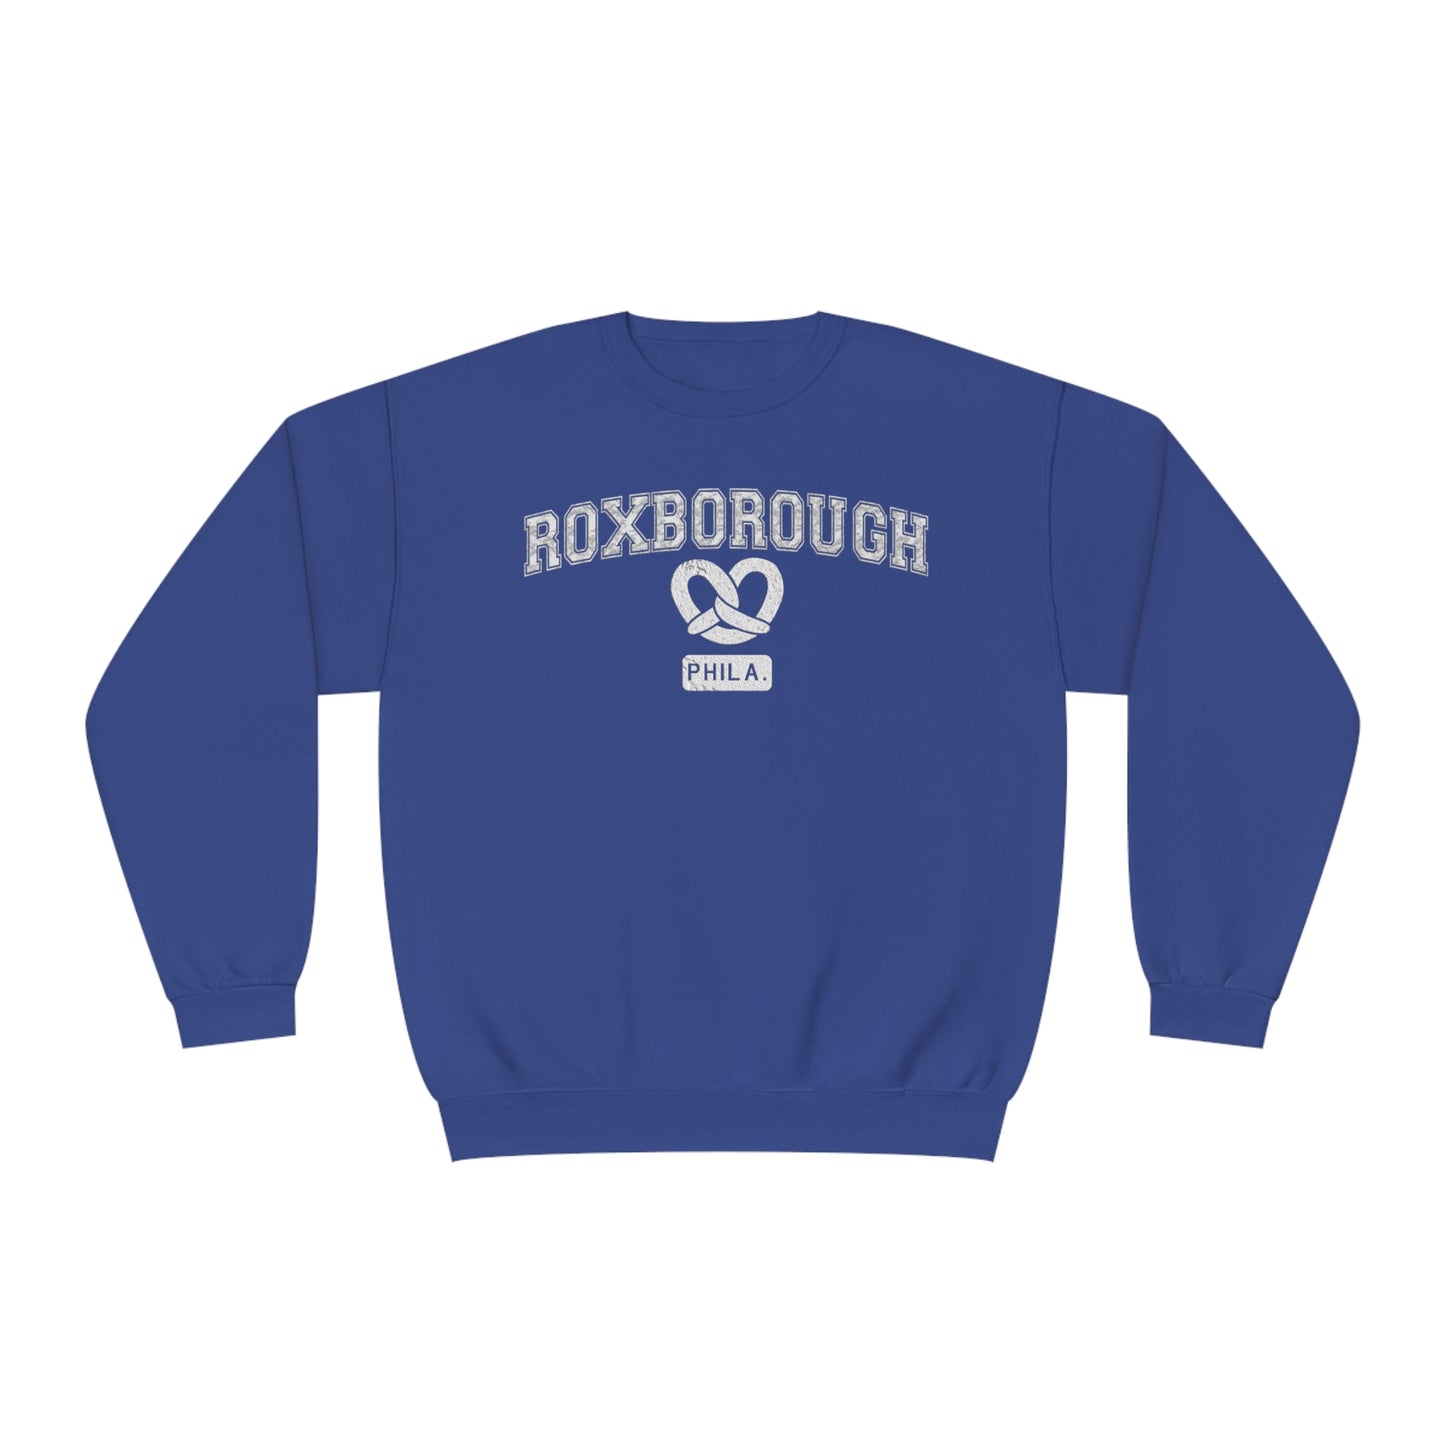 Roxborough // Phila. Crewneck Sweatshirt